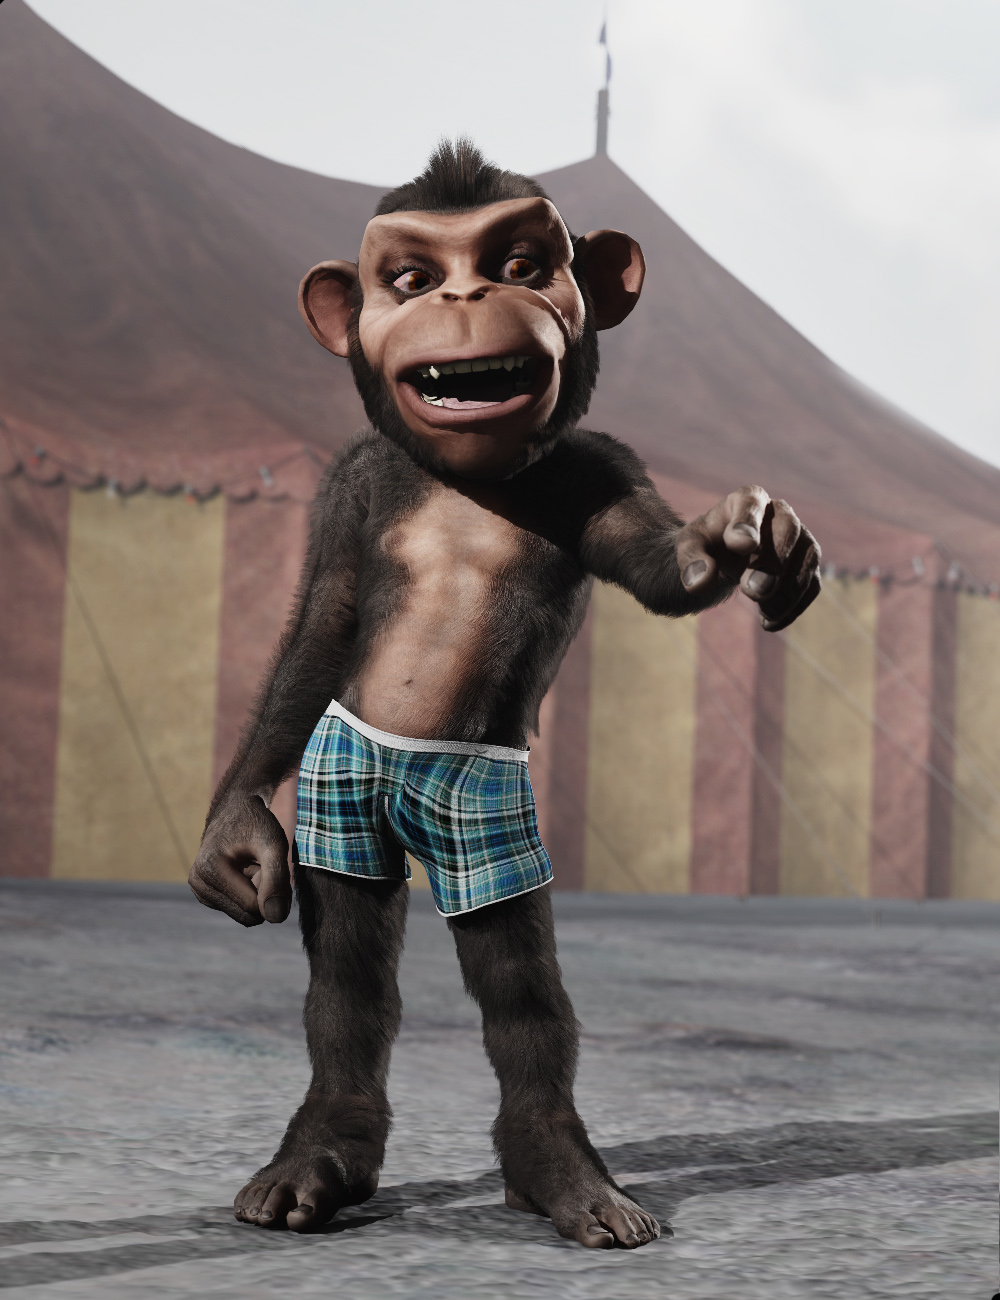 Darwin the Toon Chimp by: RawArt, 3D Models by Daz 3D